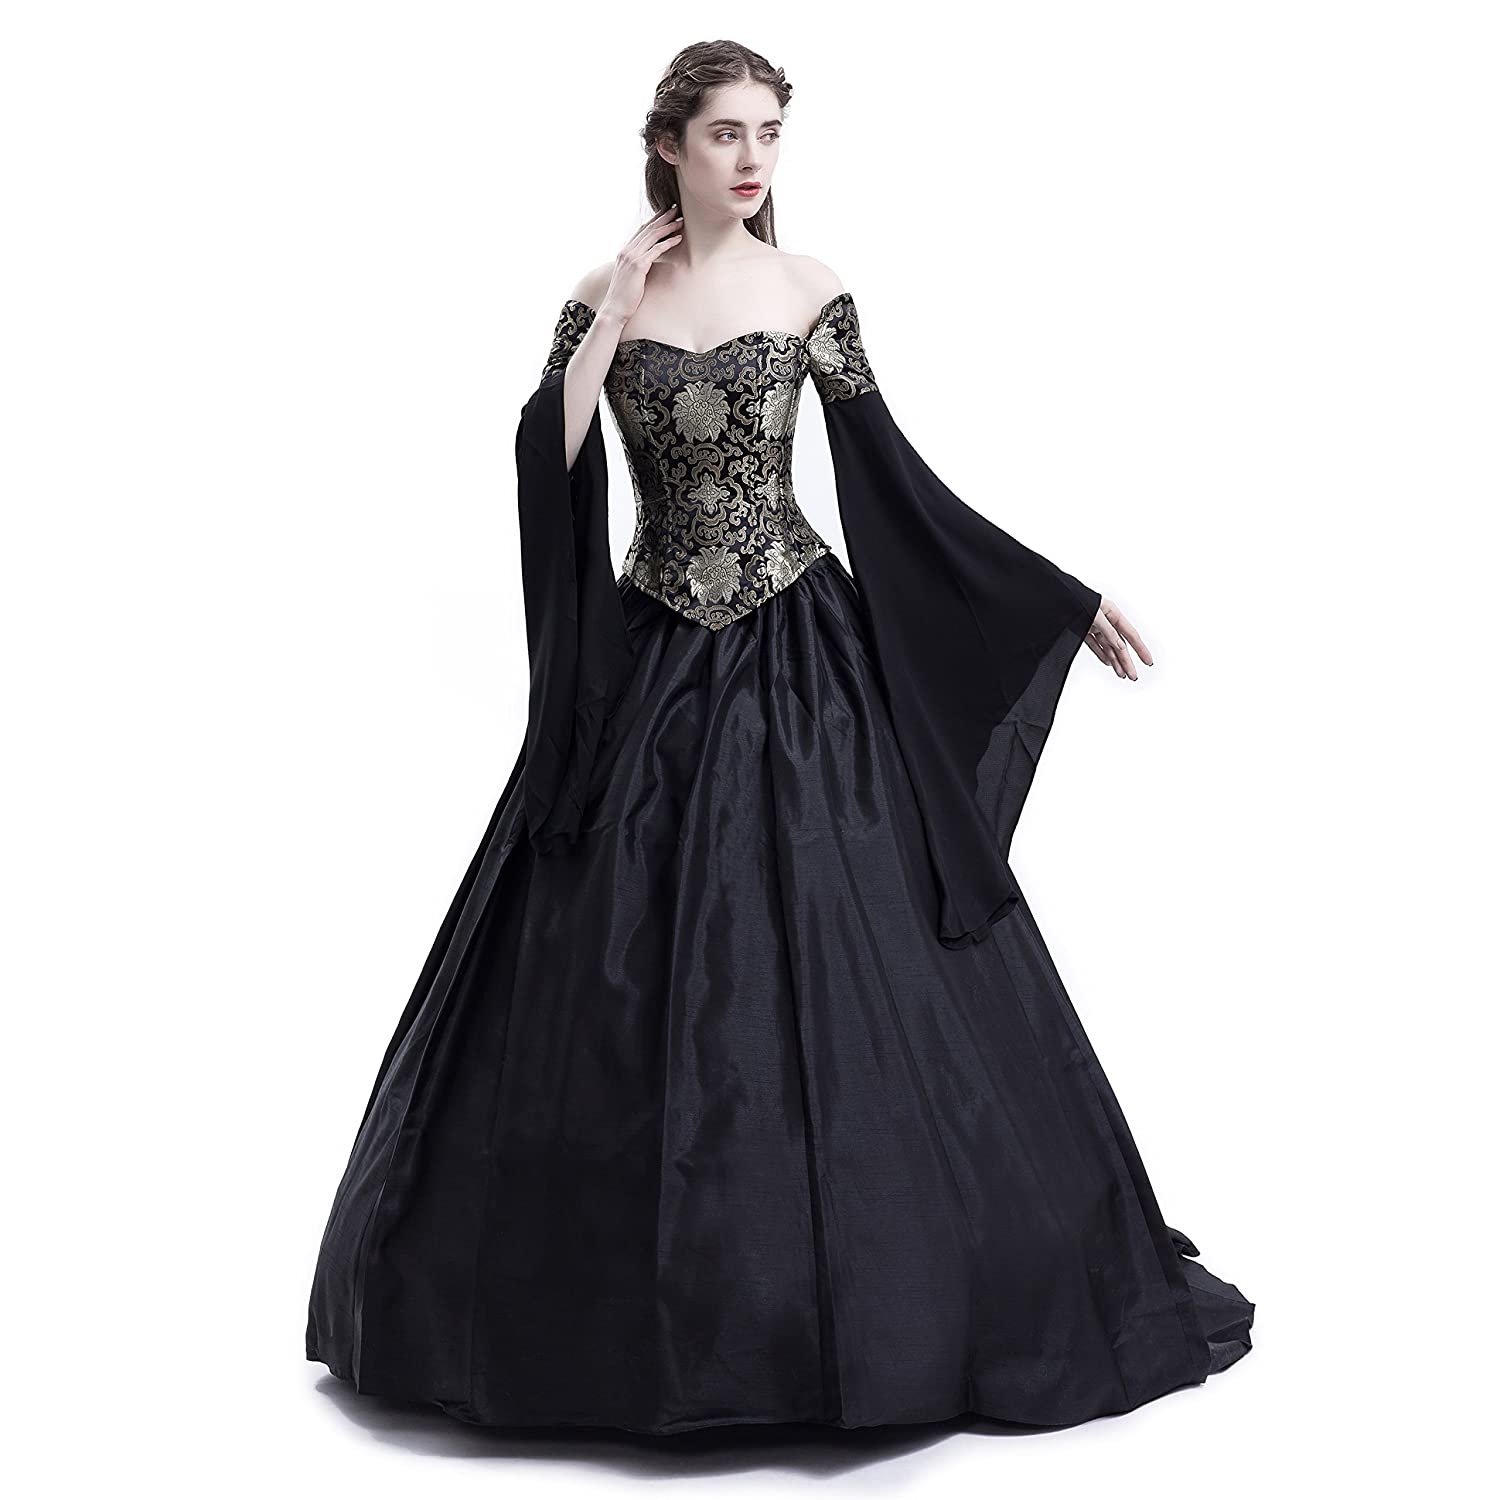 Gothic Wedding Dresses - VisualHunt